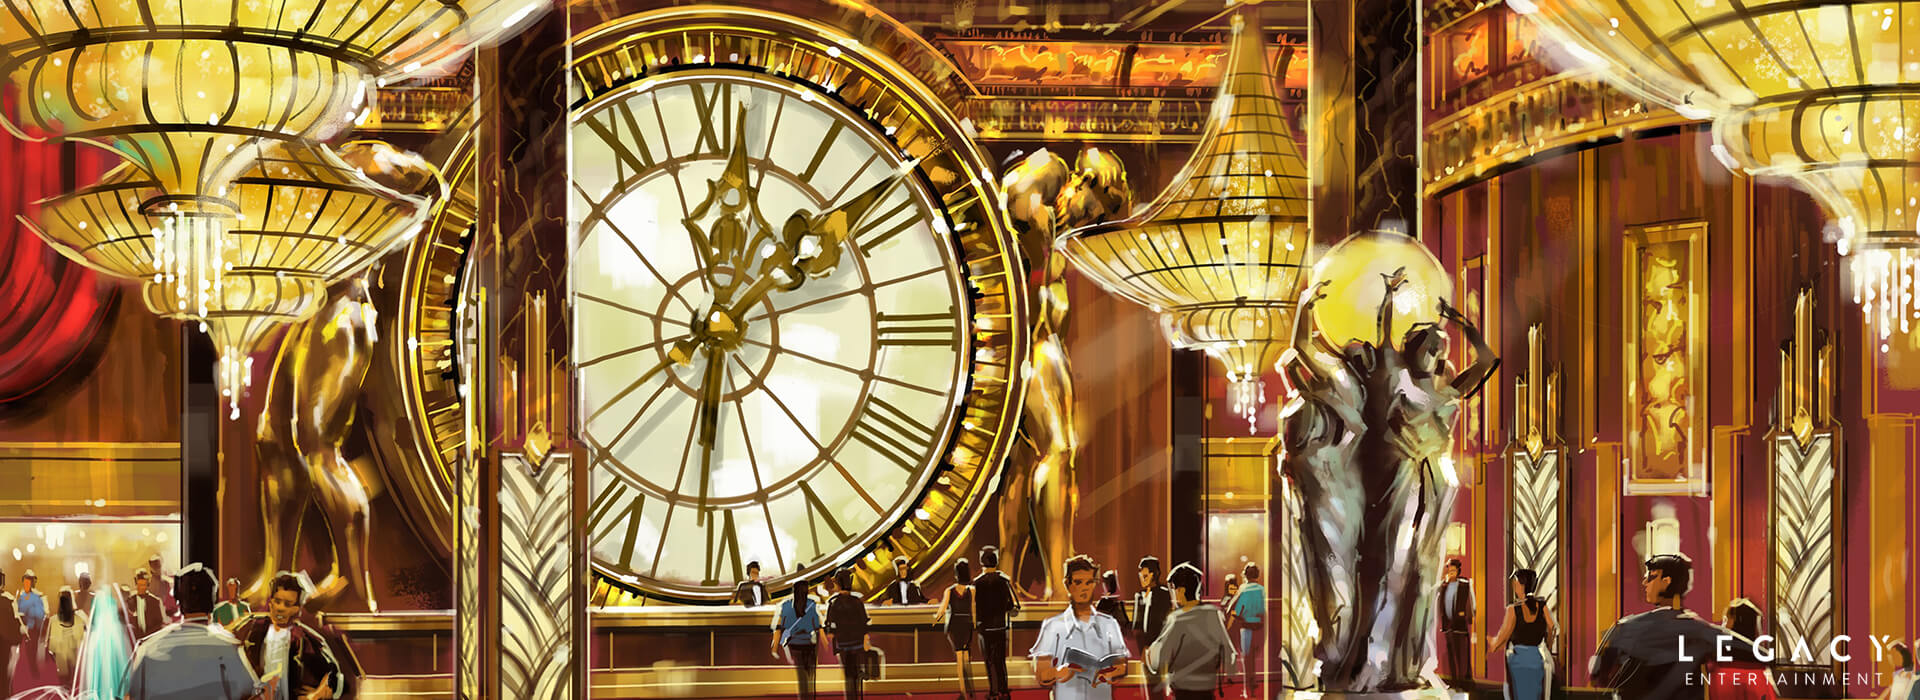 Macau_Studio_City_Casino_Resort_Hotel_Design_Legacy_Entertainment_40